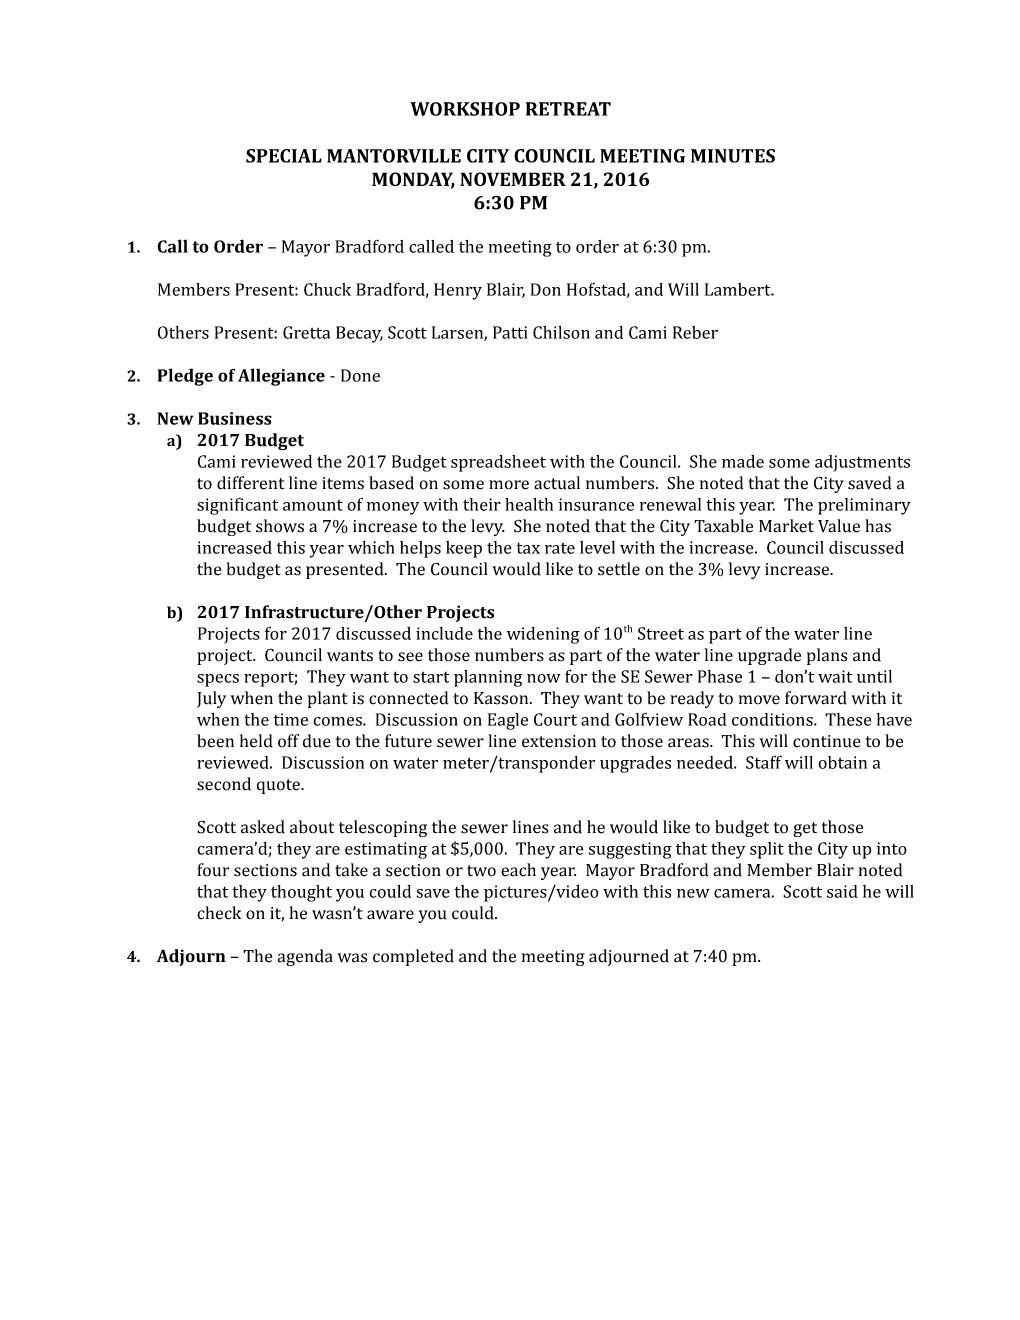 Mantorville City Council Meeting Agenda s1